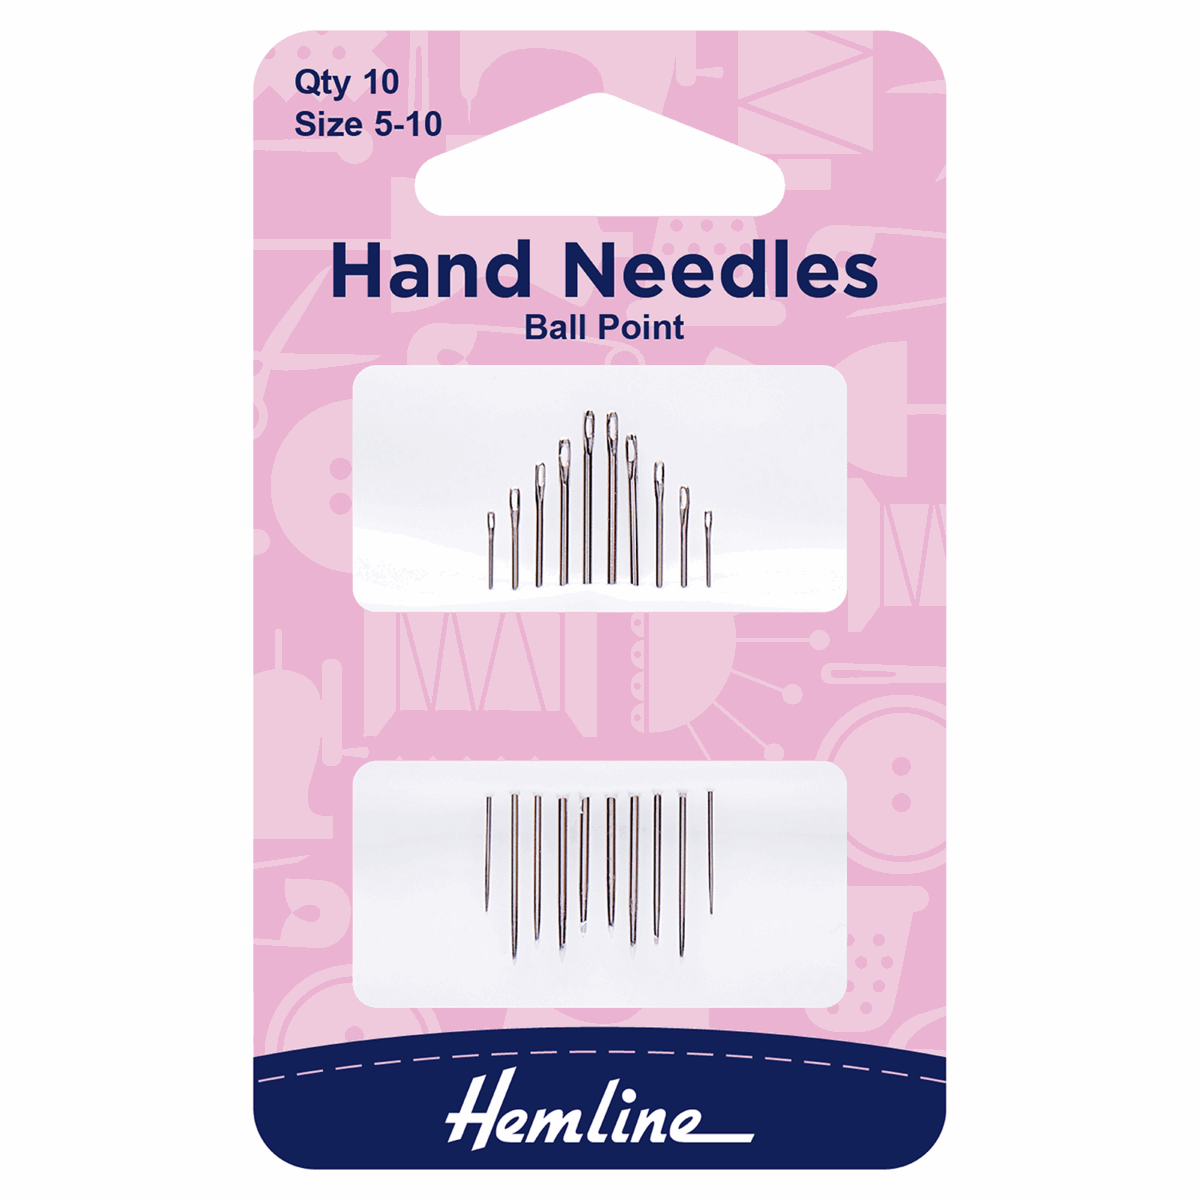 Hemline Ball Point Needles - Size 5-10